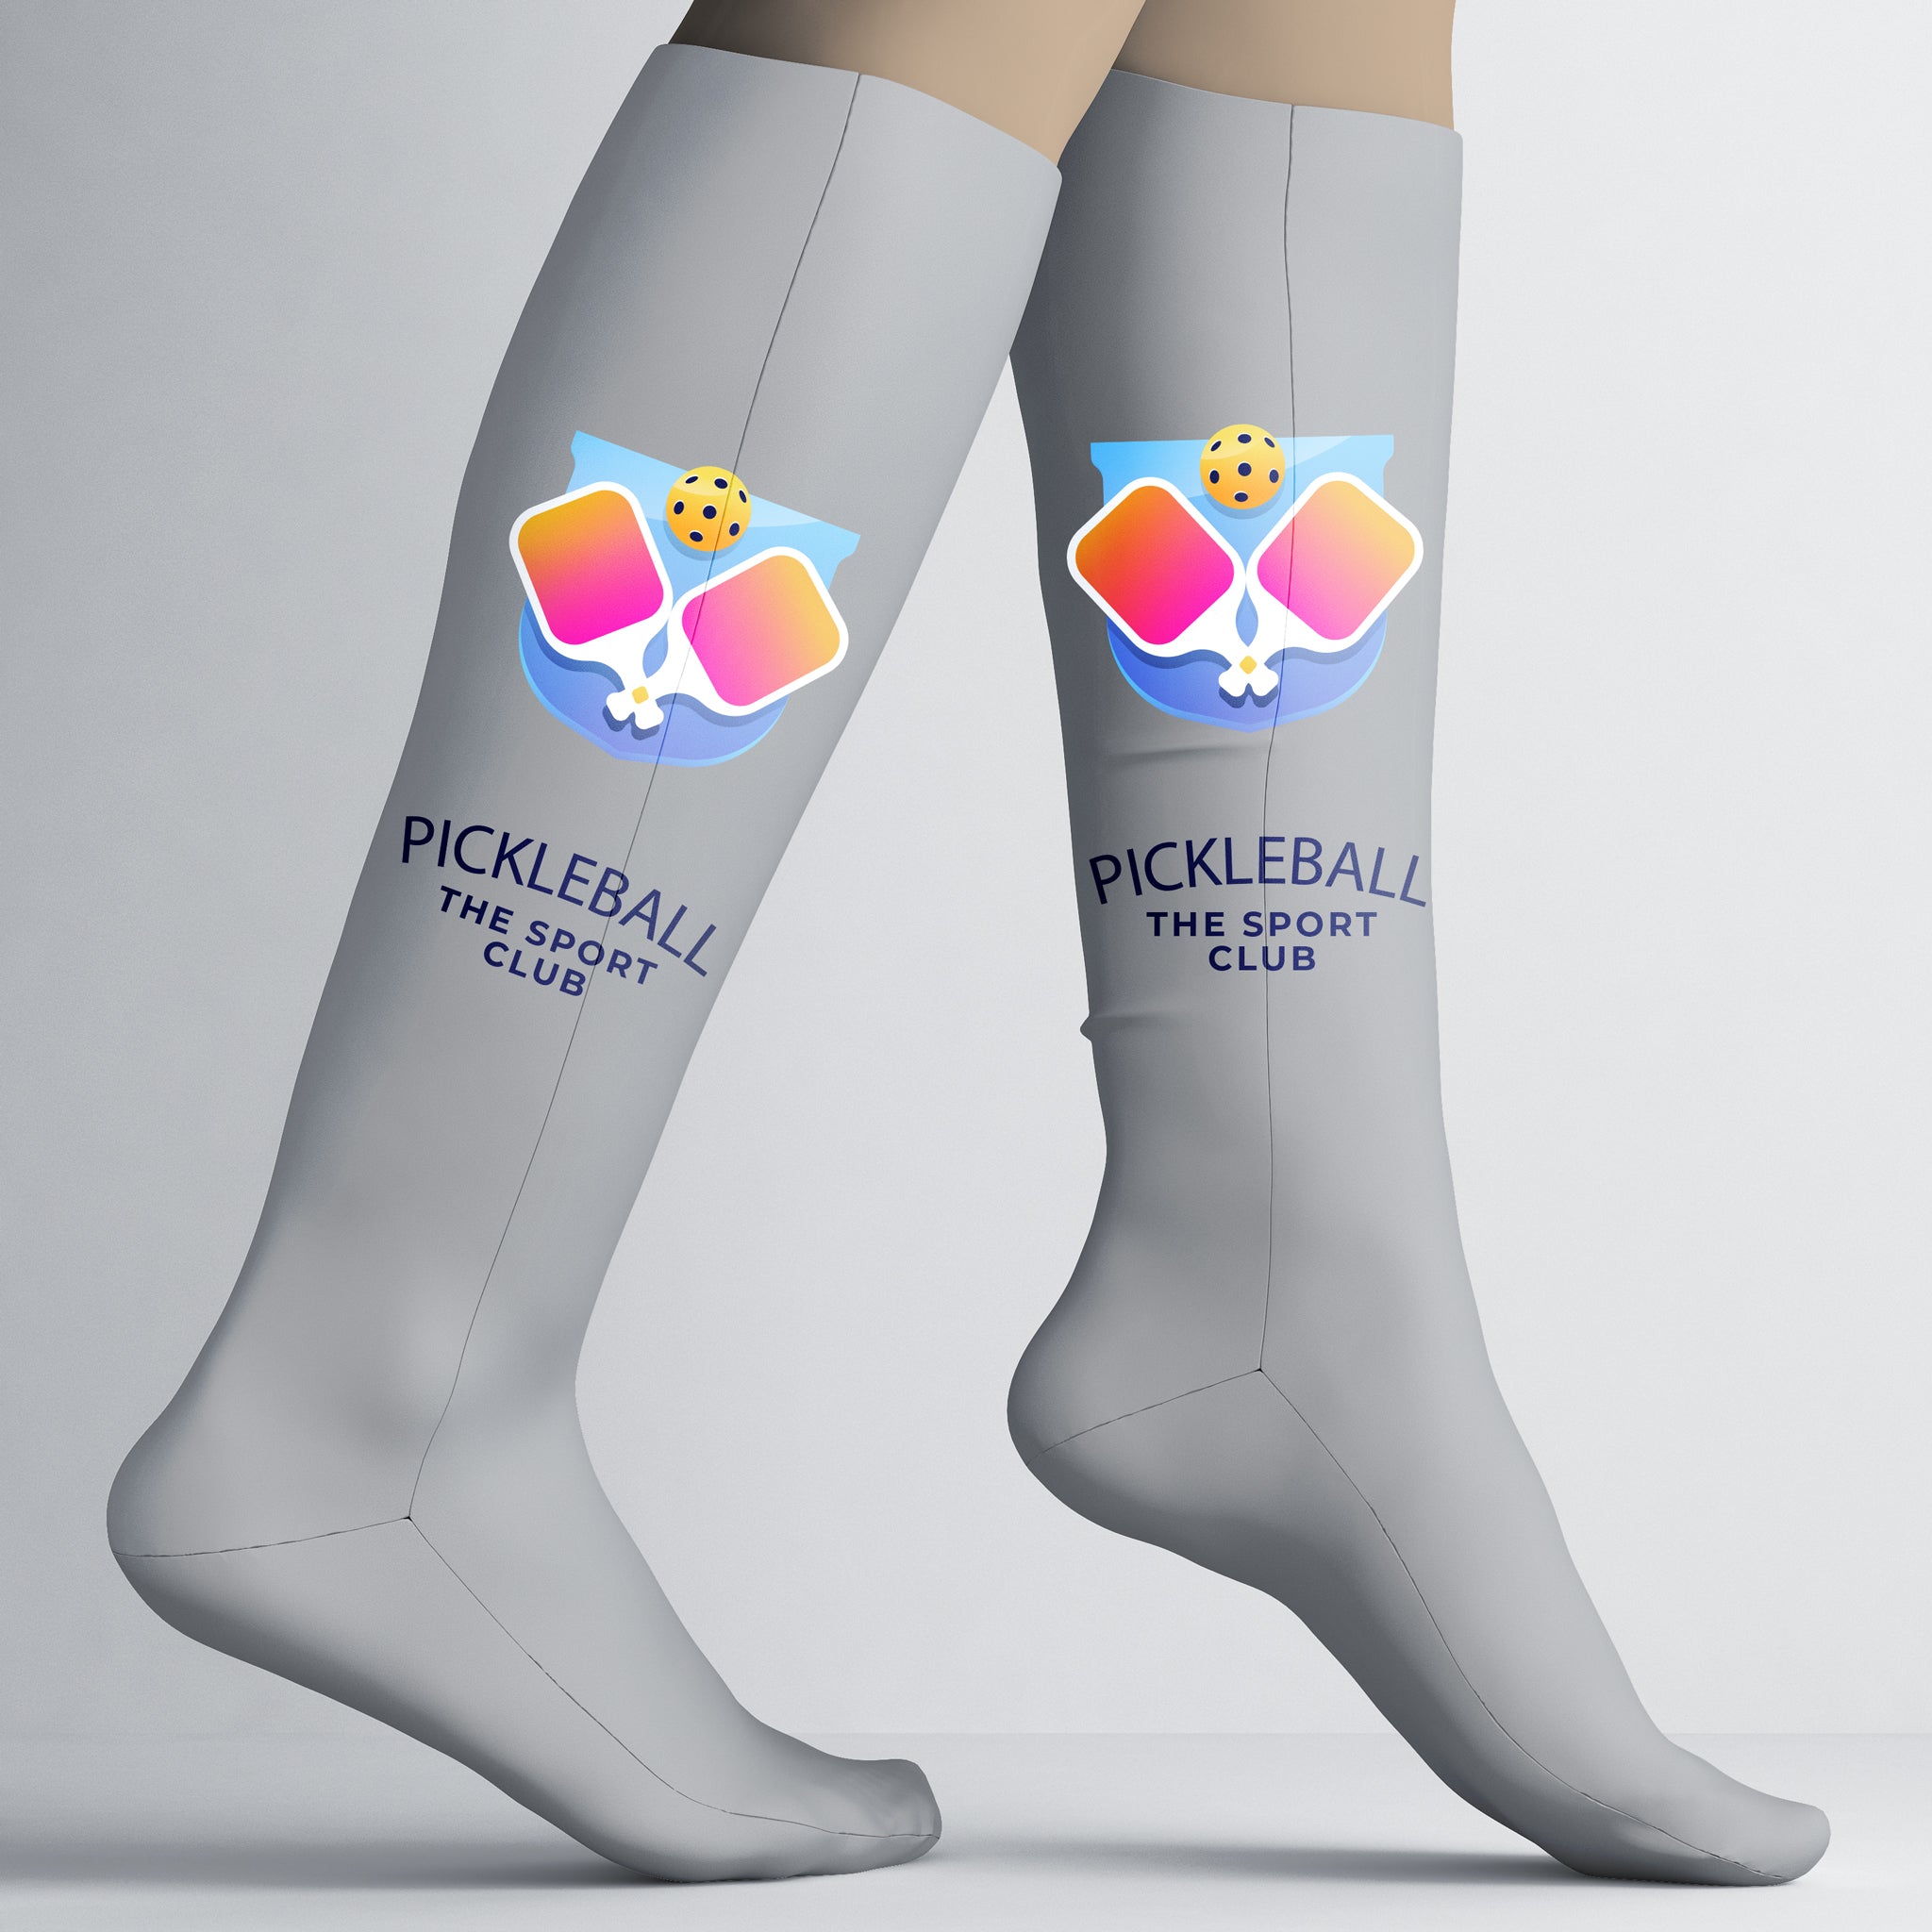 Custom Knee-High Socks, $9.12 - $12 per pair